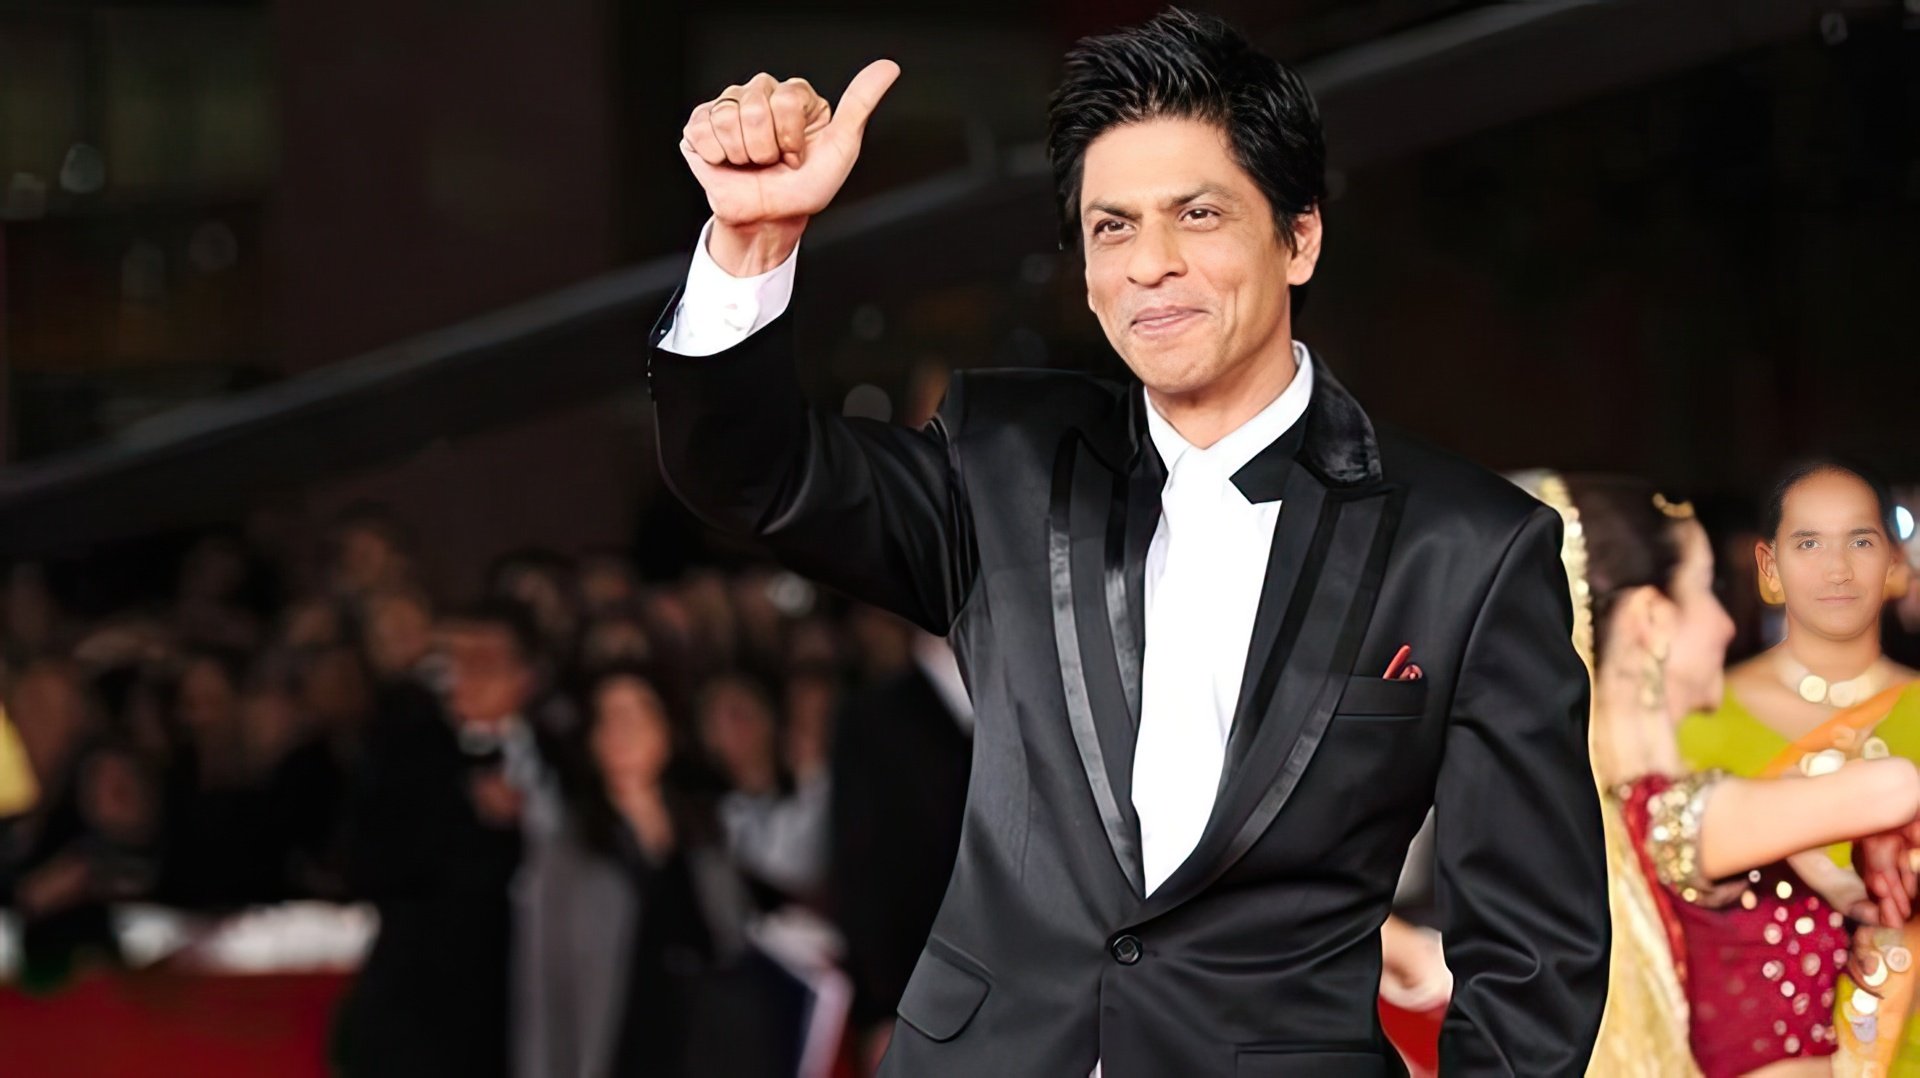 Shah Rukh Khan on the red carpet